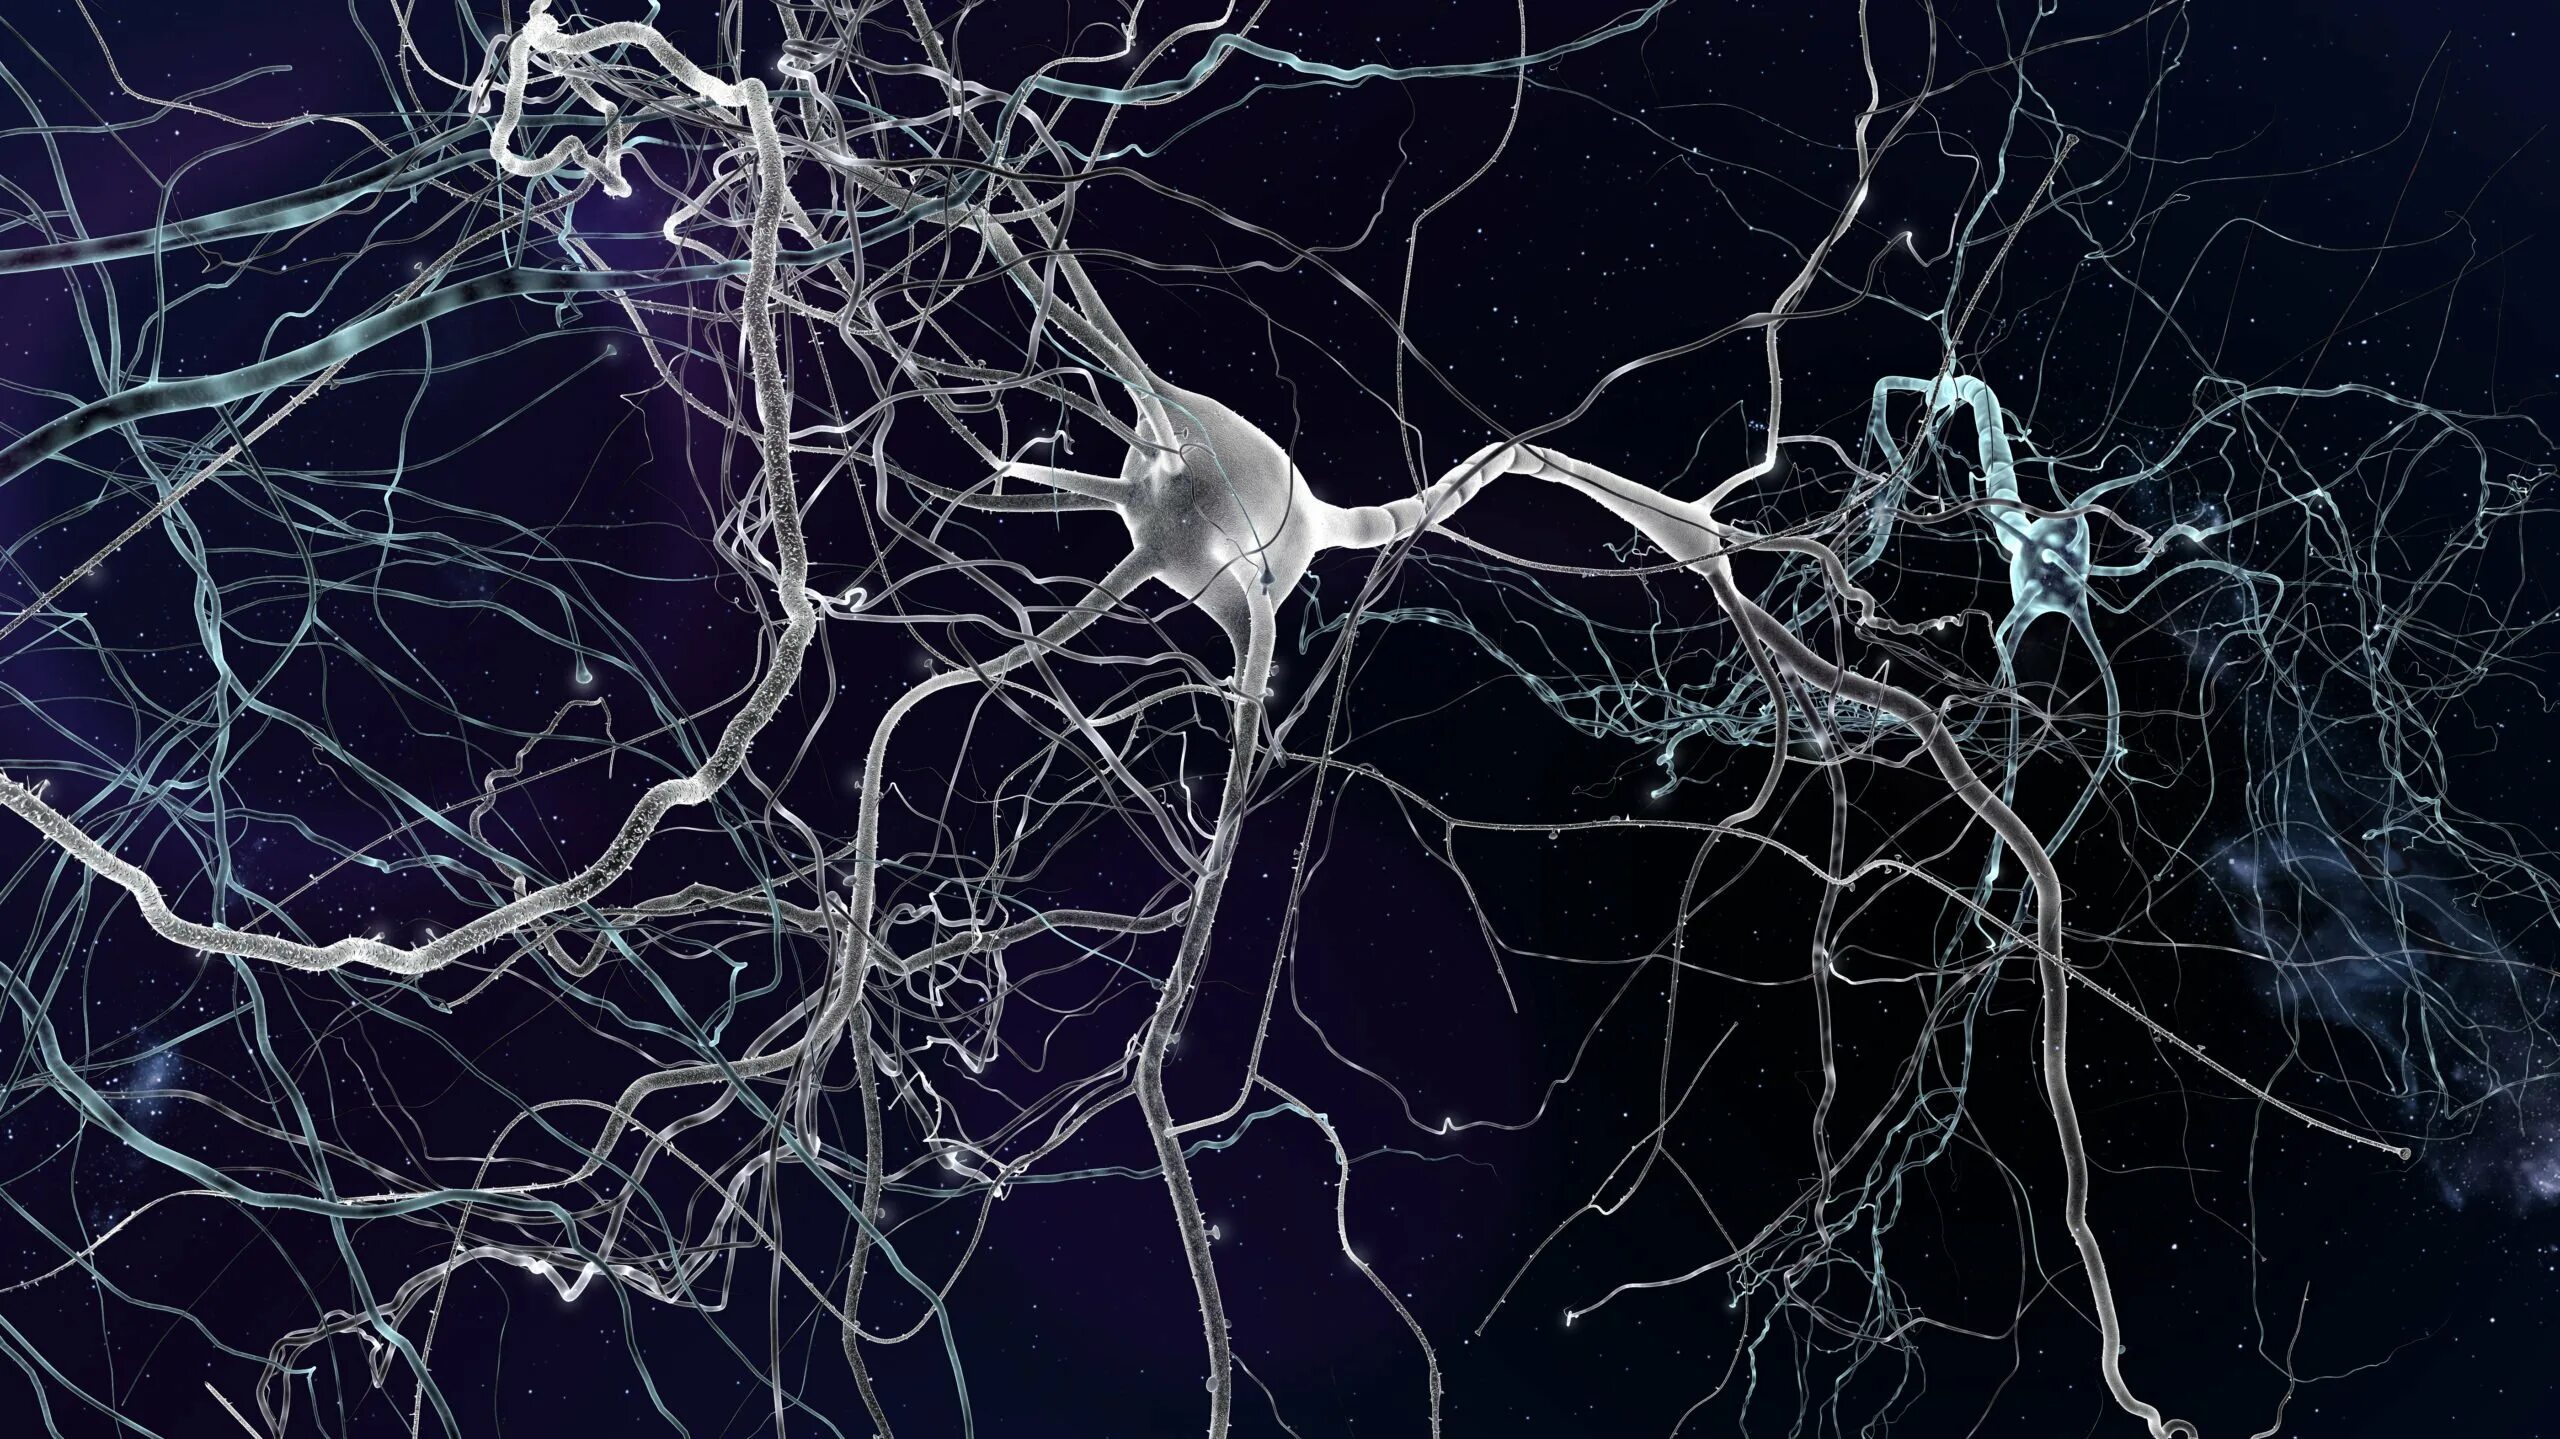 Ирритация коры головного мозга. Нейрон клетка головного мозга. Нейронная система мозга. Нейронные связи в мозге. Нейронные сети головного мозга.